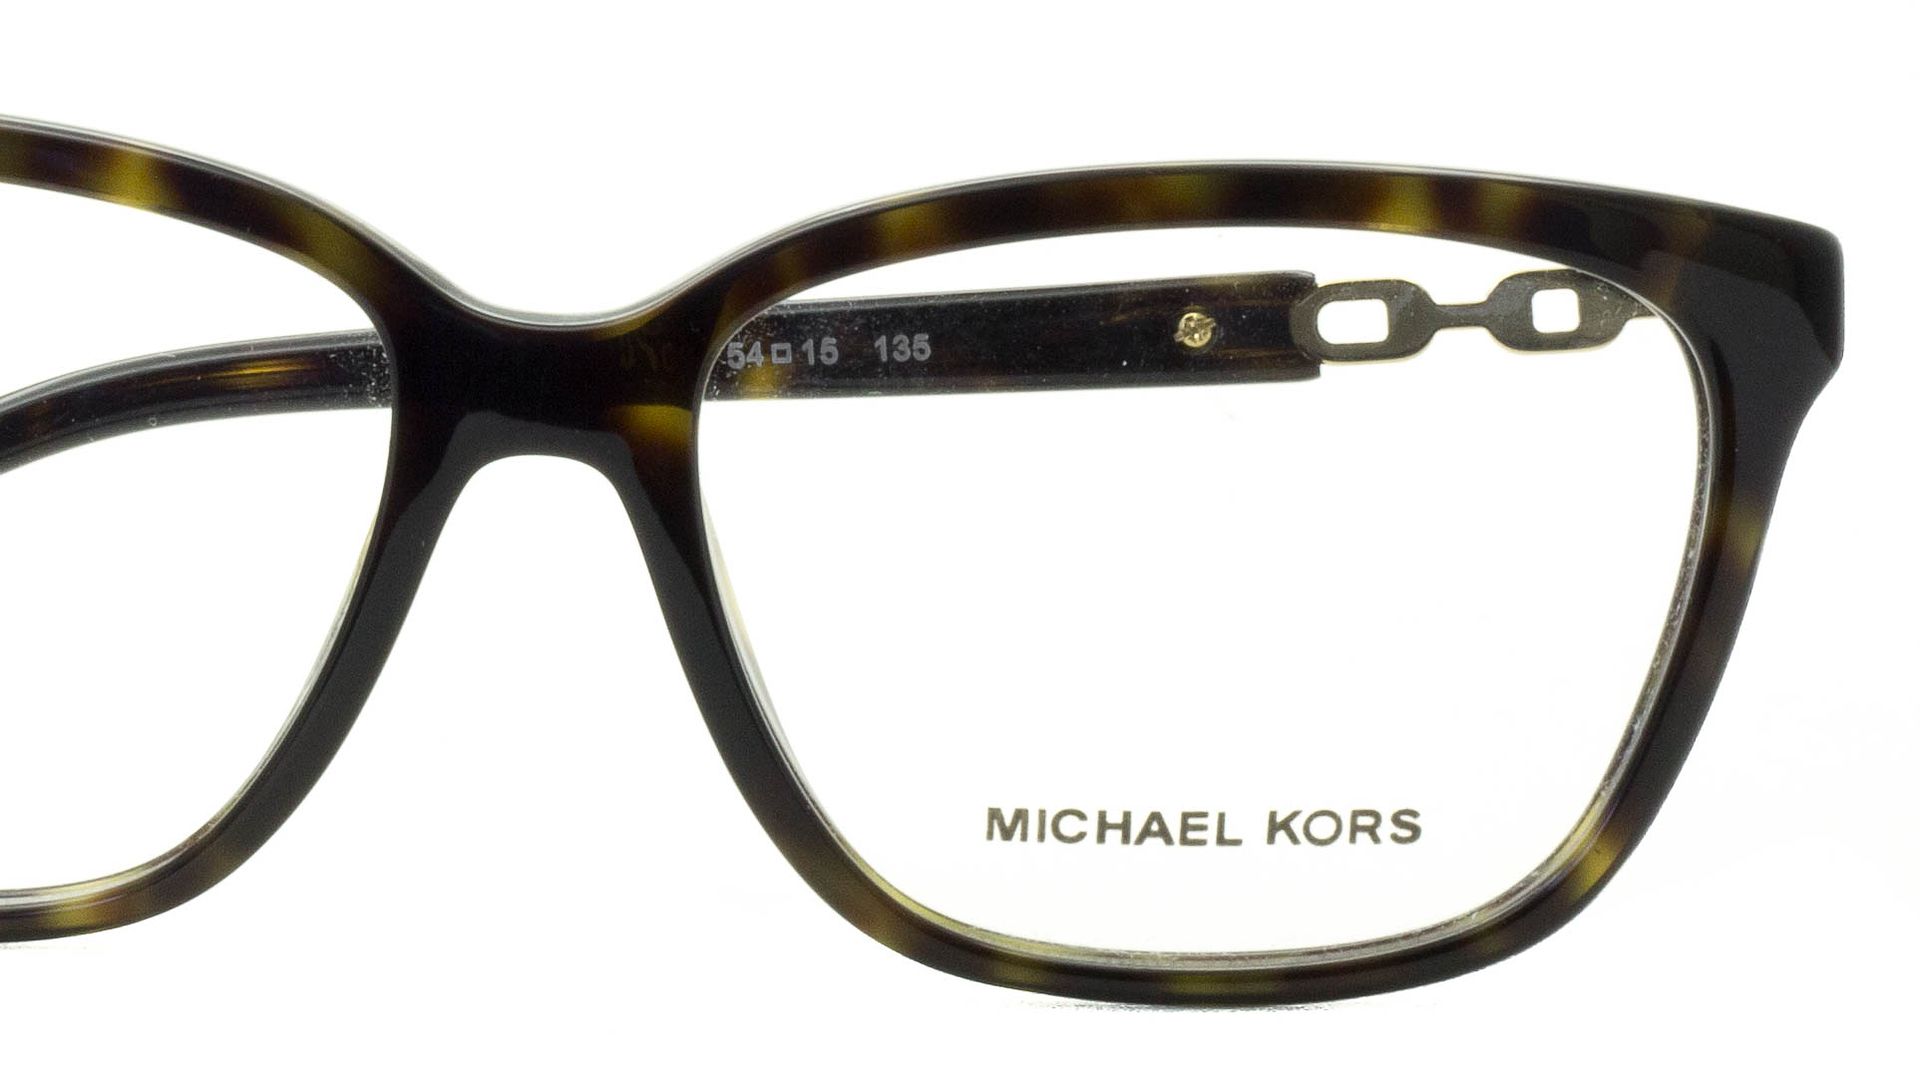 Michael Kors Mk 8018 Sabrina Iv 3106 Eyewear Frames Rx Optical Eyeglasses New Ggv Eyewear